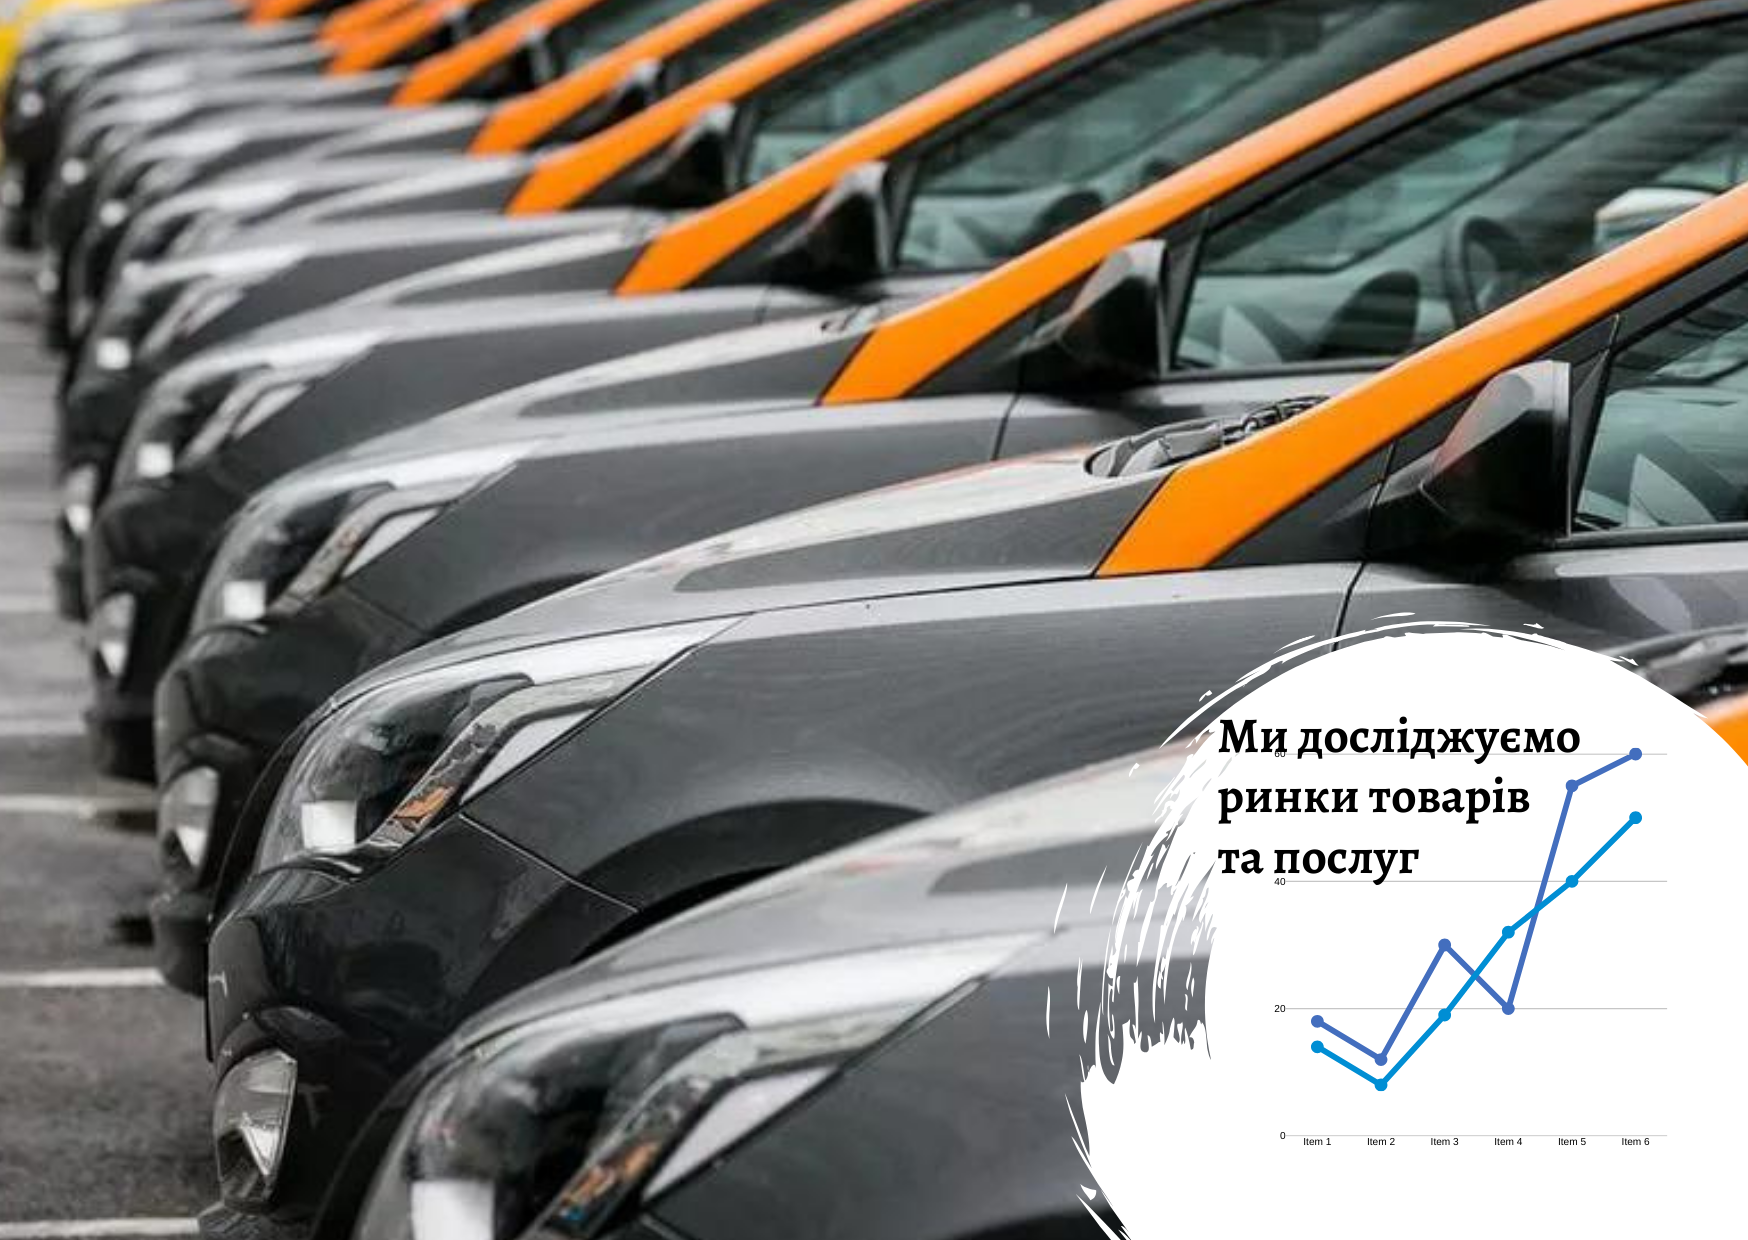 Ukrainian car sharing market - research report